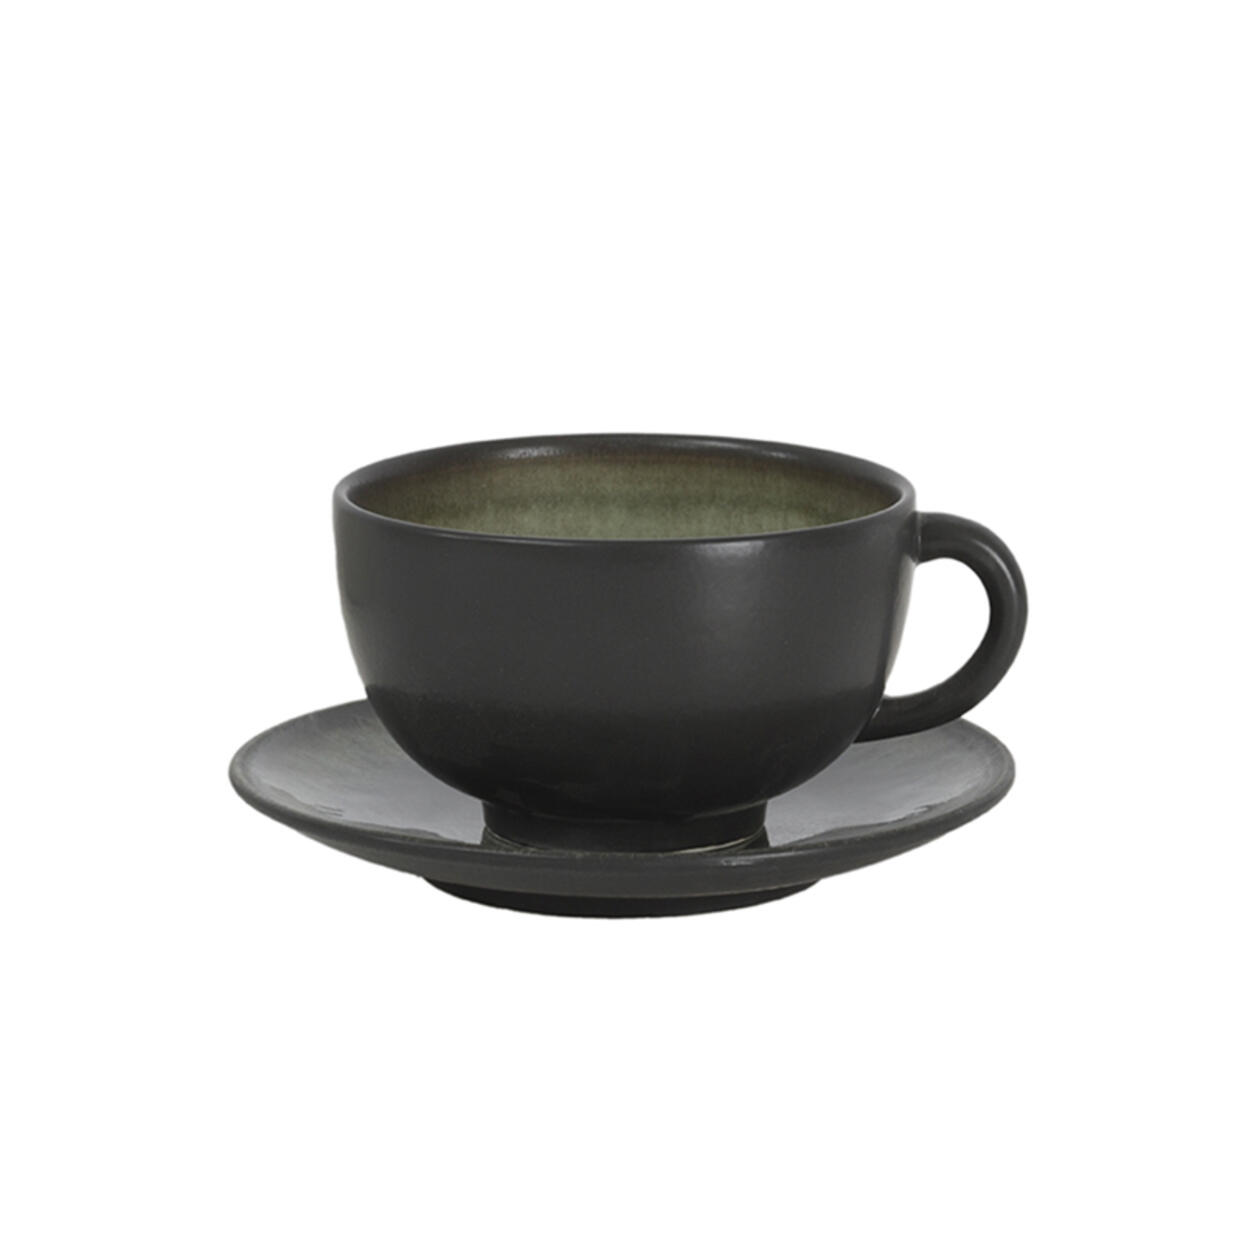 cup & saucer - l tourron samoa ceramic manufacturer